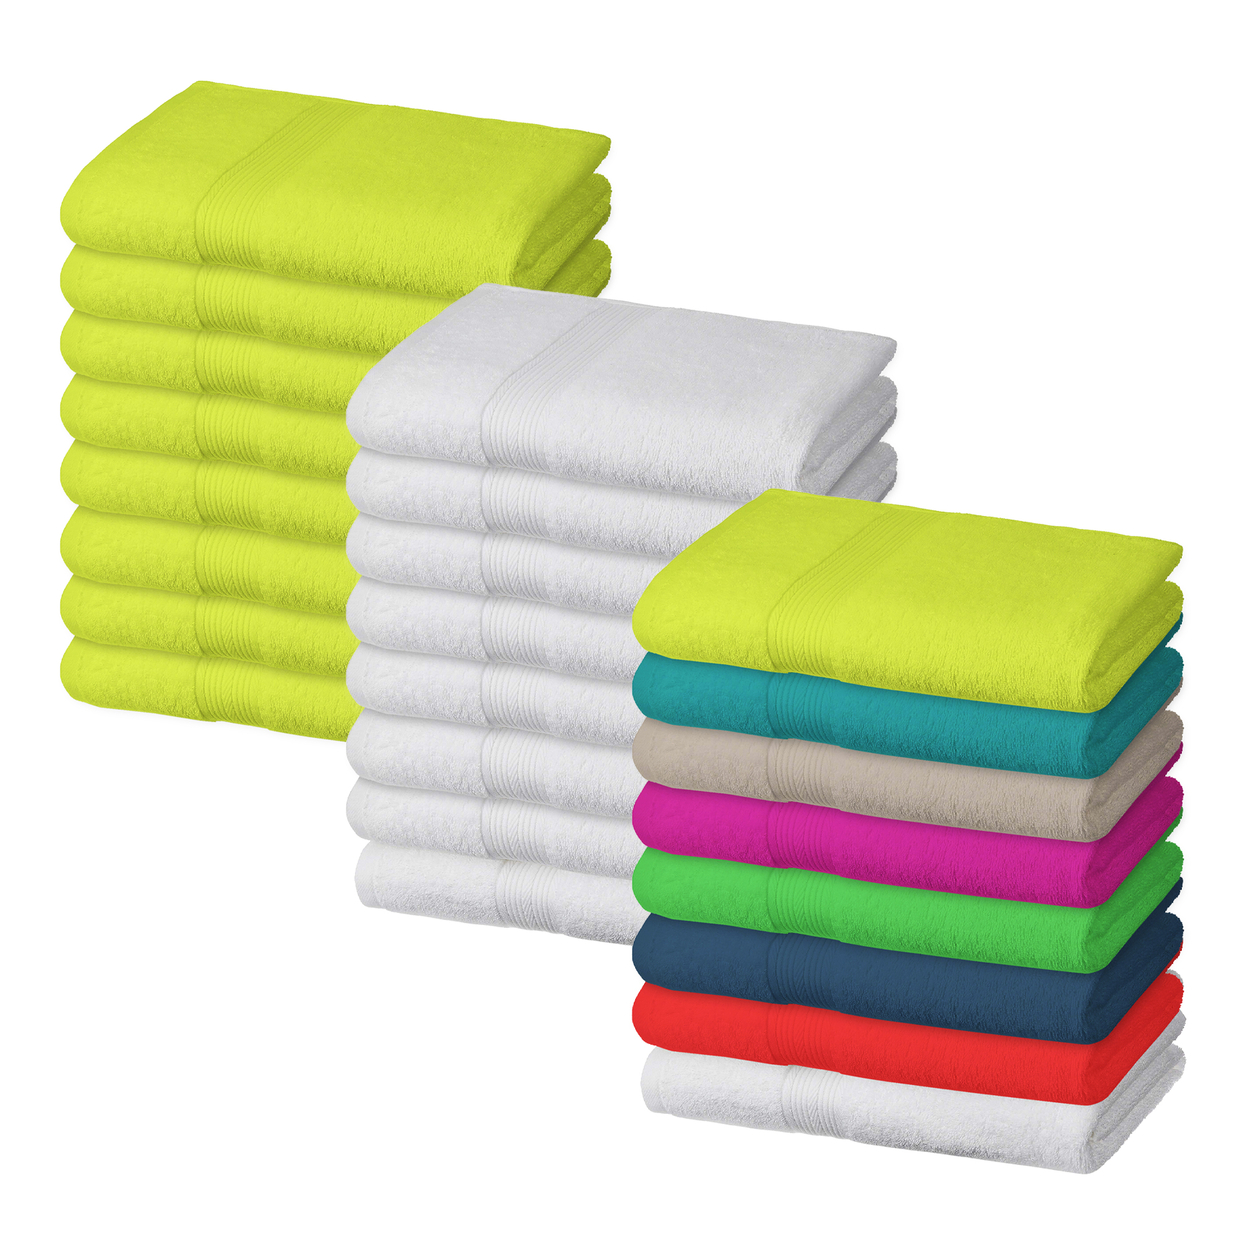 4-Pack: Super Absorbent 100% Cotton 54 X 27 Hotel Beach Bath Towels - Tan